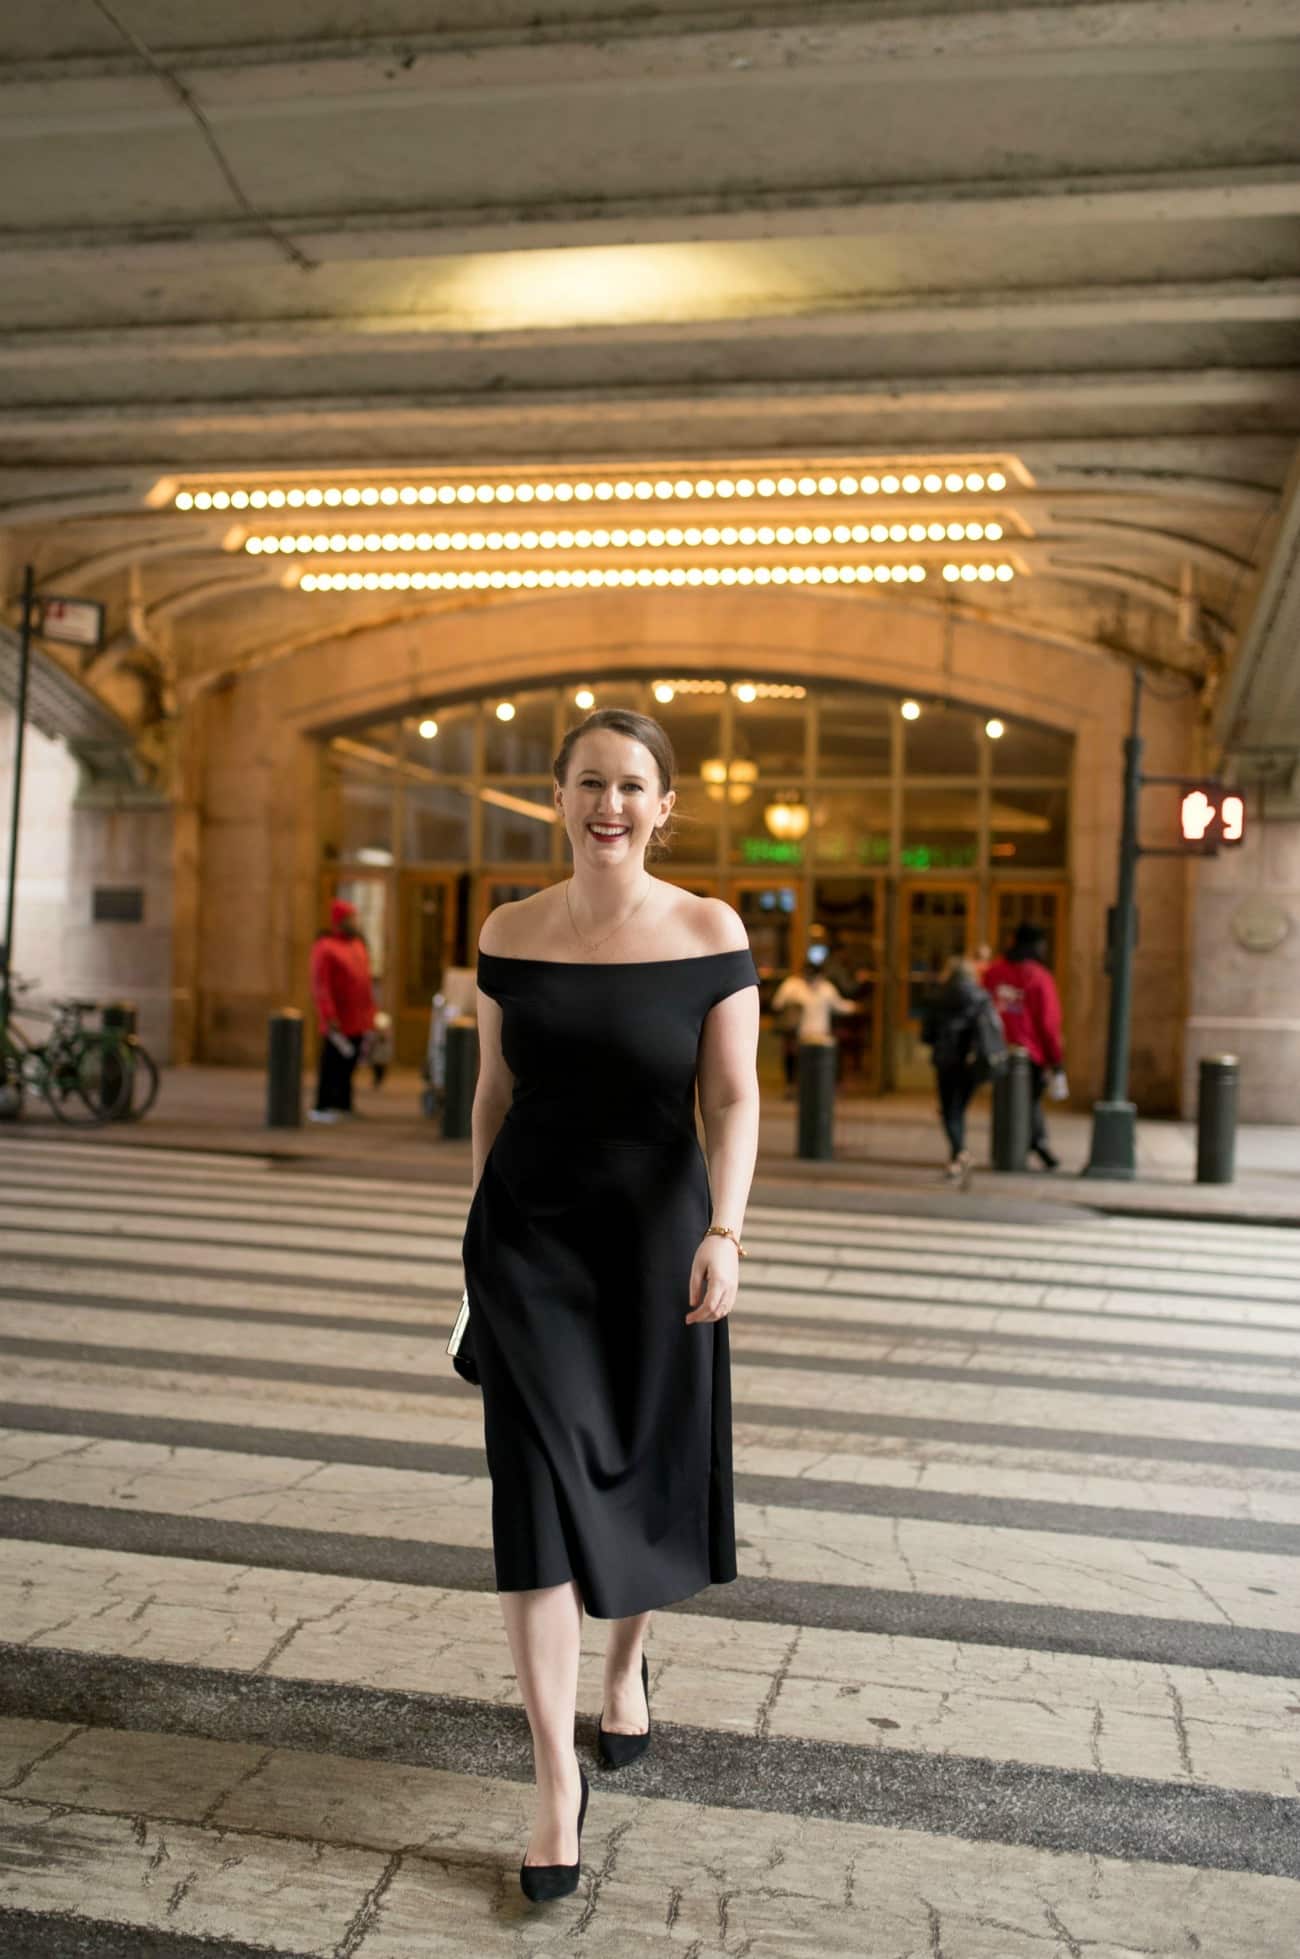 Little Black Dress at Grand Central Station I wit & whimsy